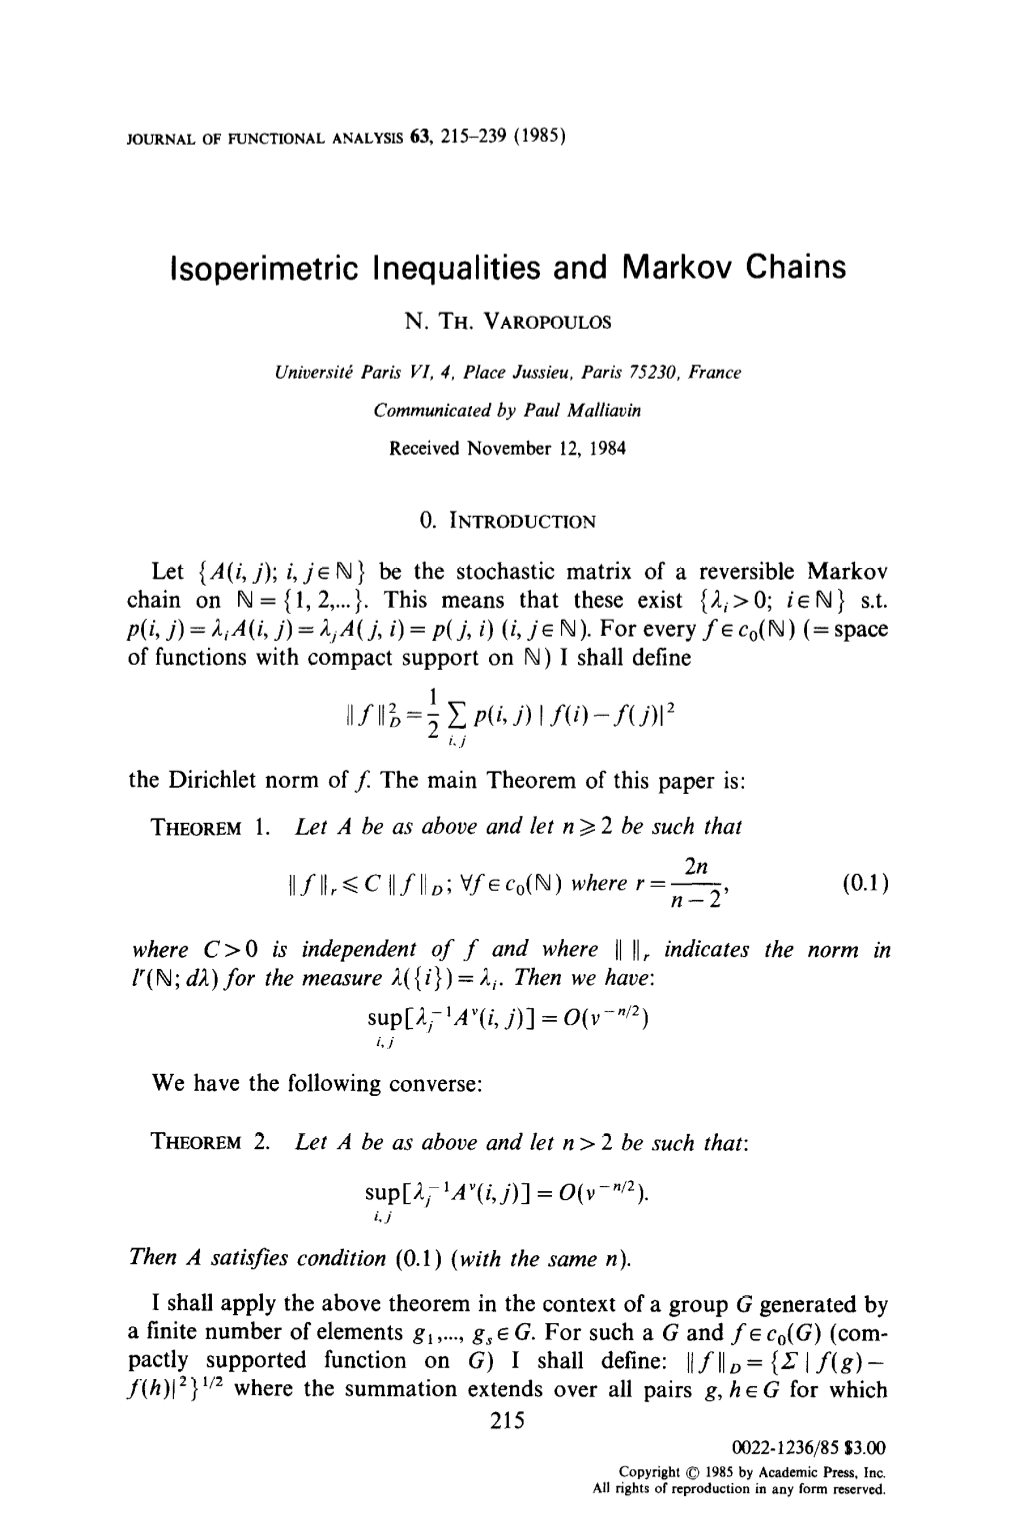 Lsoperimetric Inequalities and Markov Chains